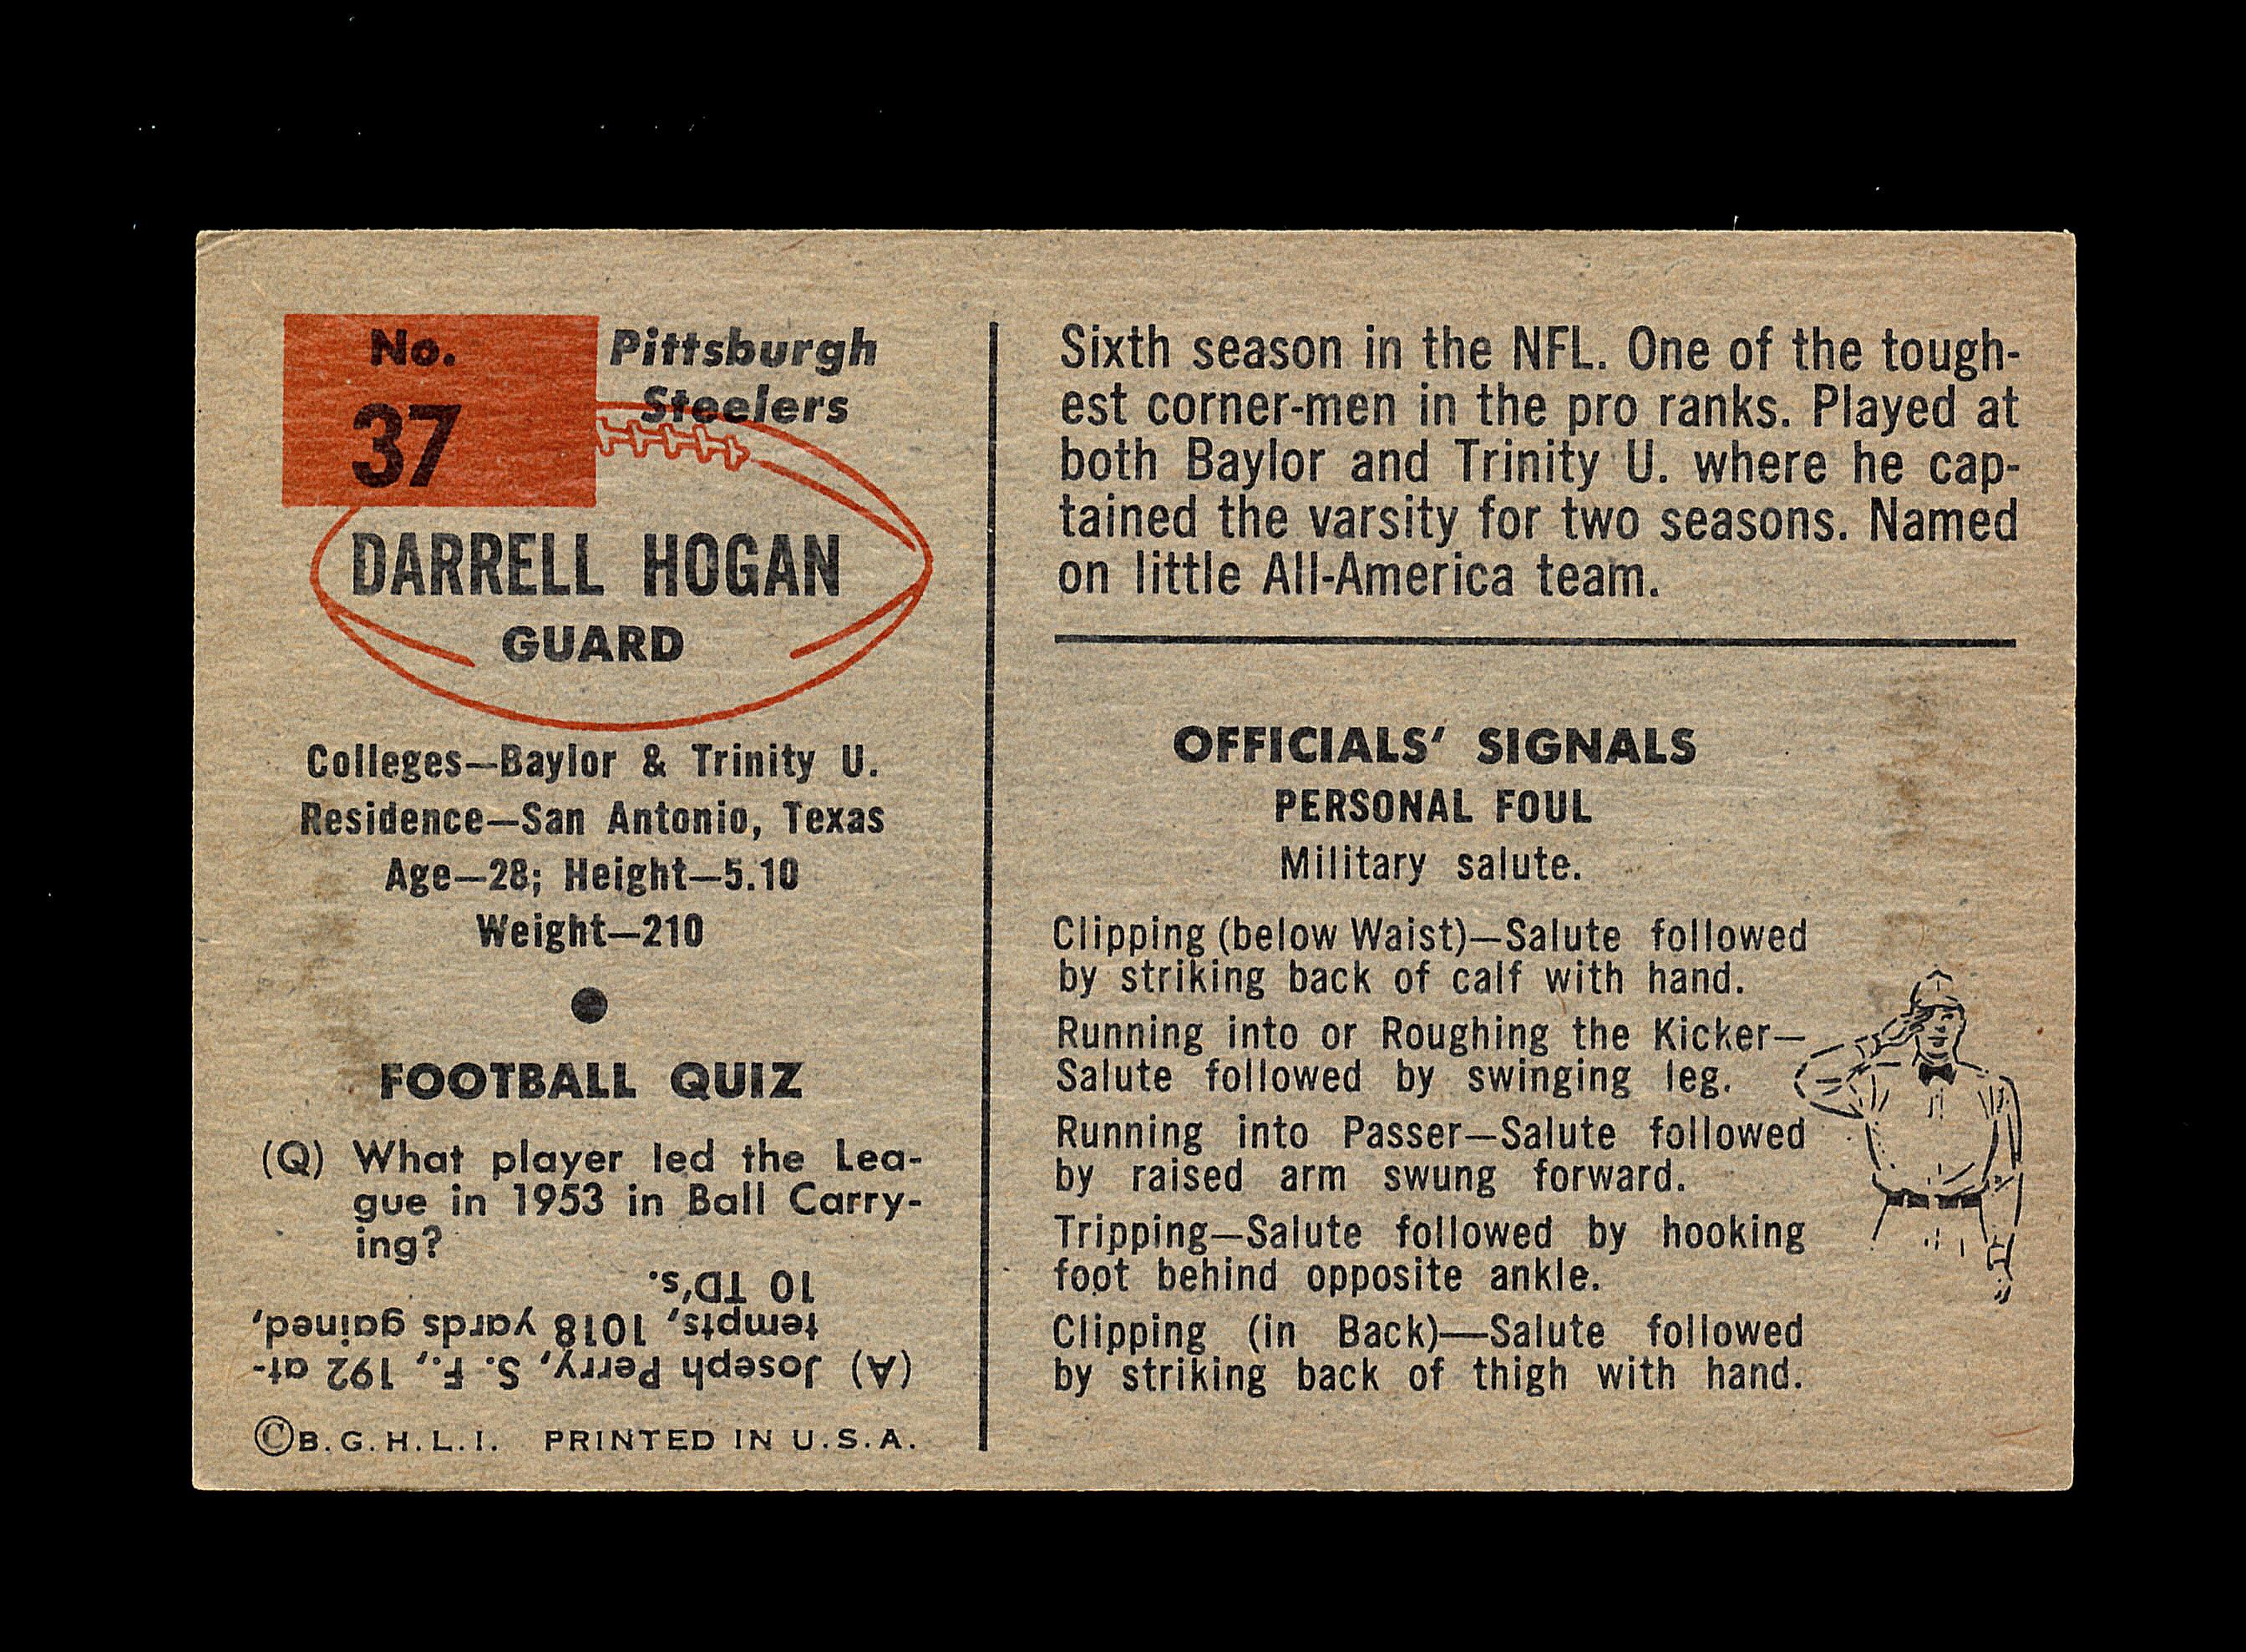 1954 Bowman Football Card #37 Darrell Hogan Pittsburgh Steelers.